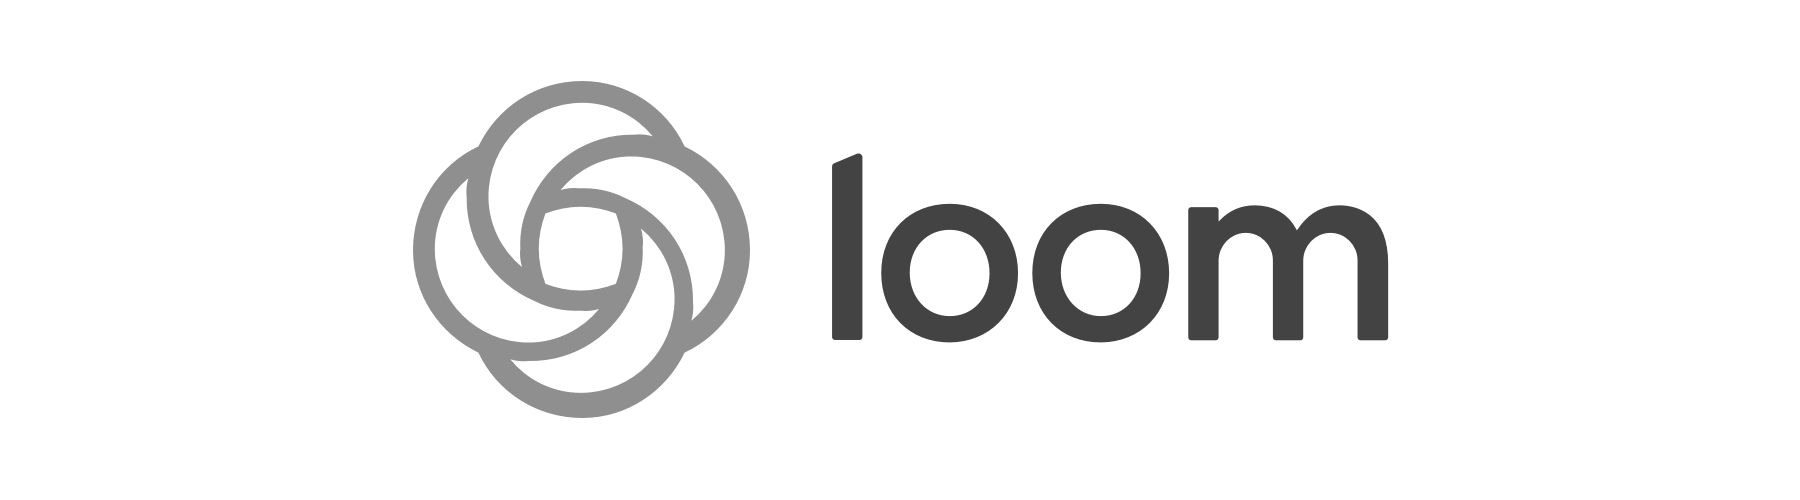 Loom logo grayscale